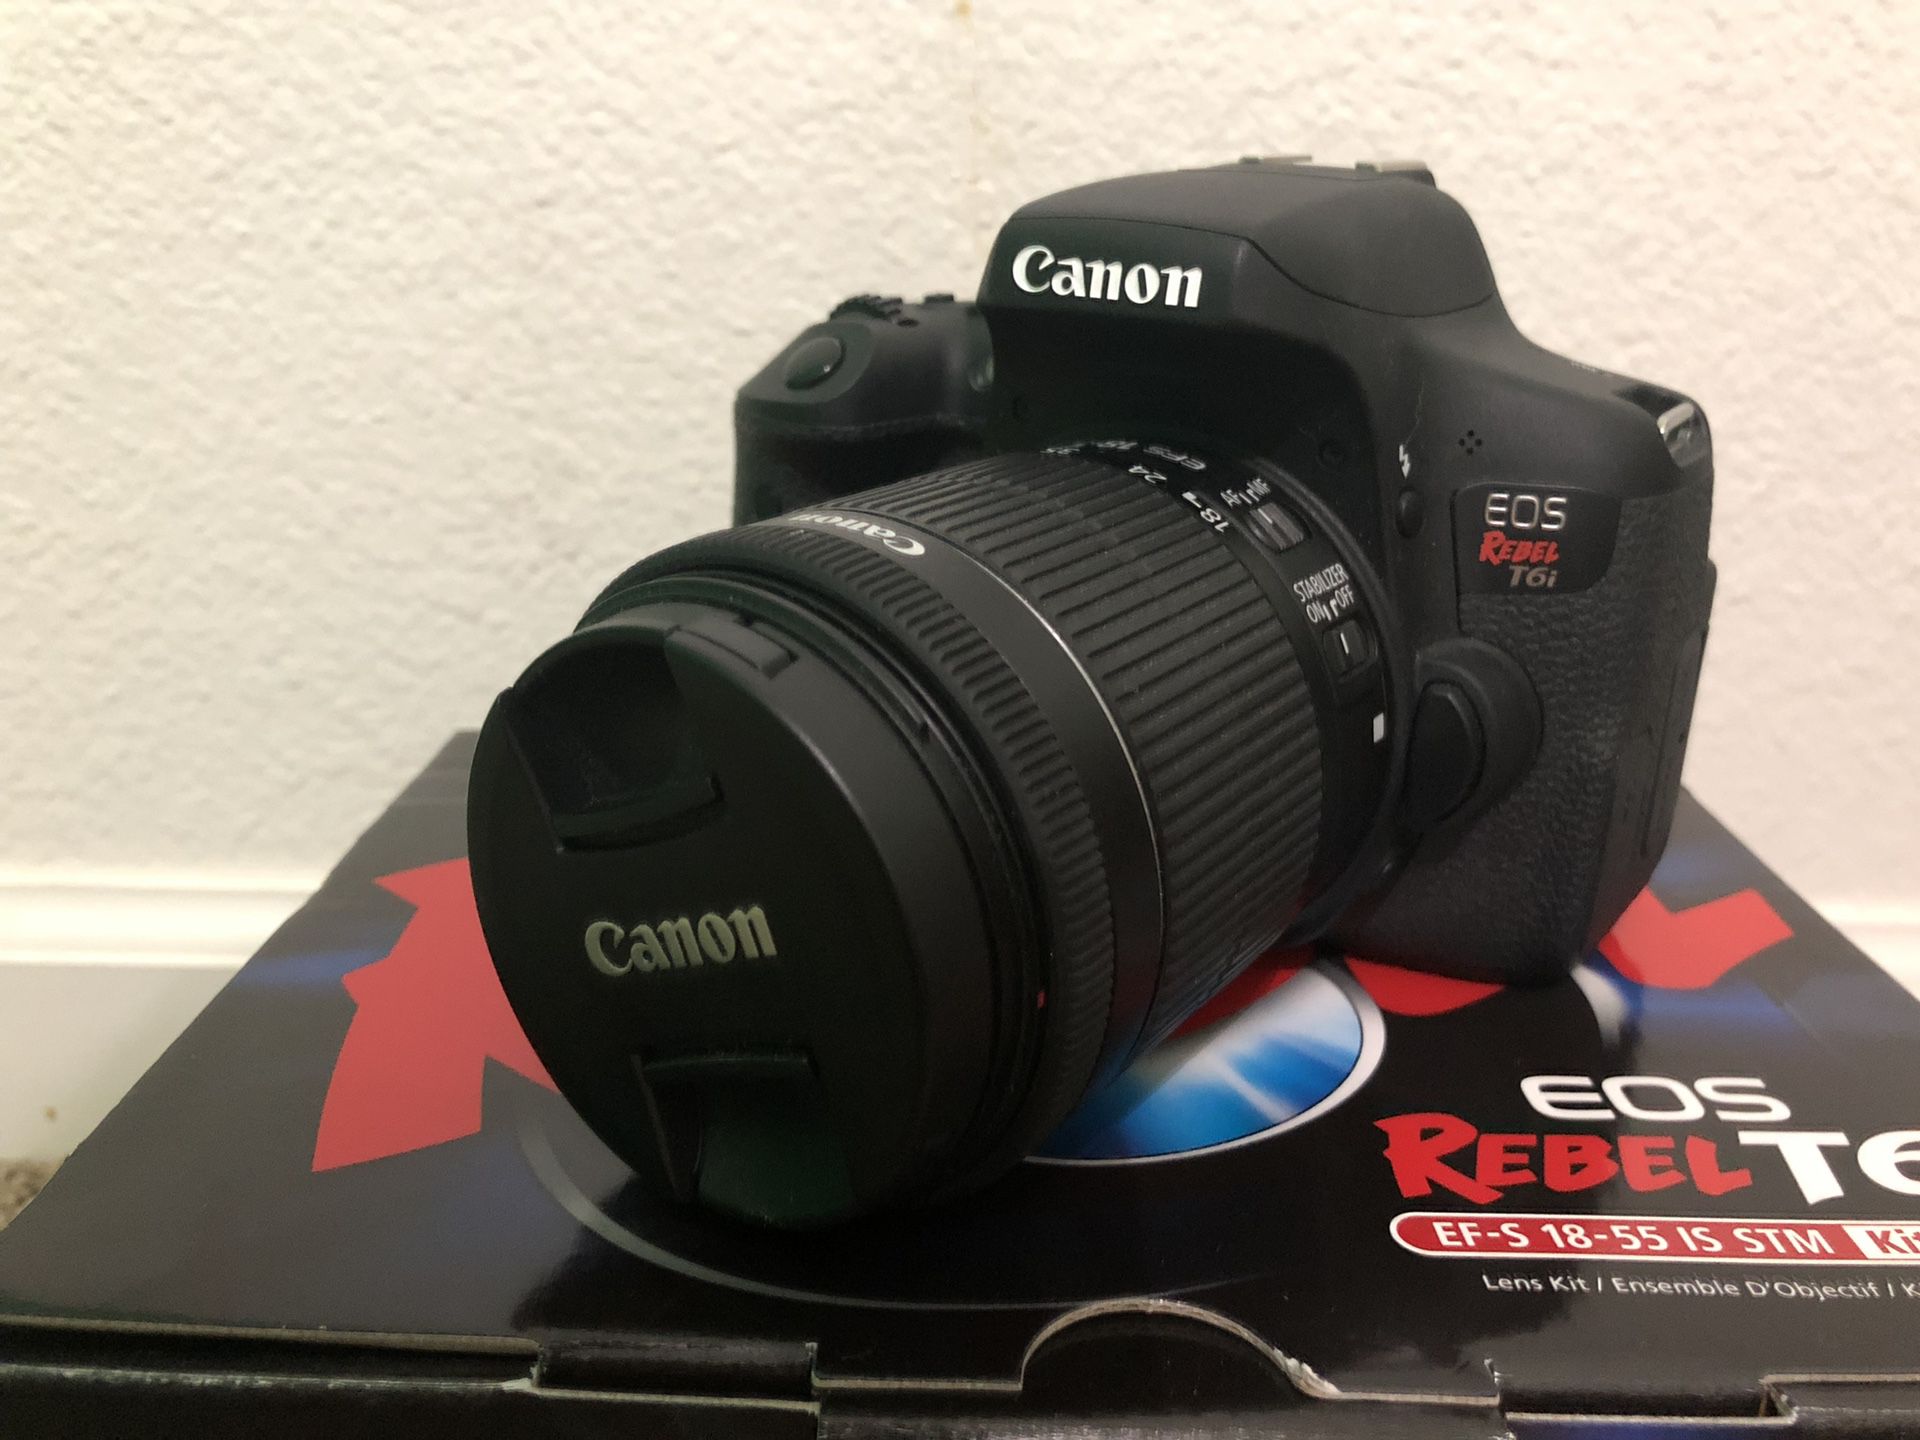 New Canon Rebel T6i